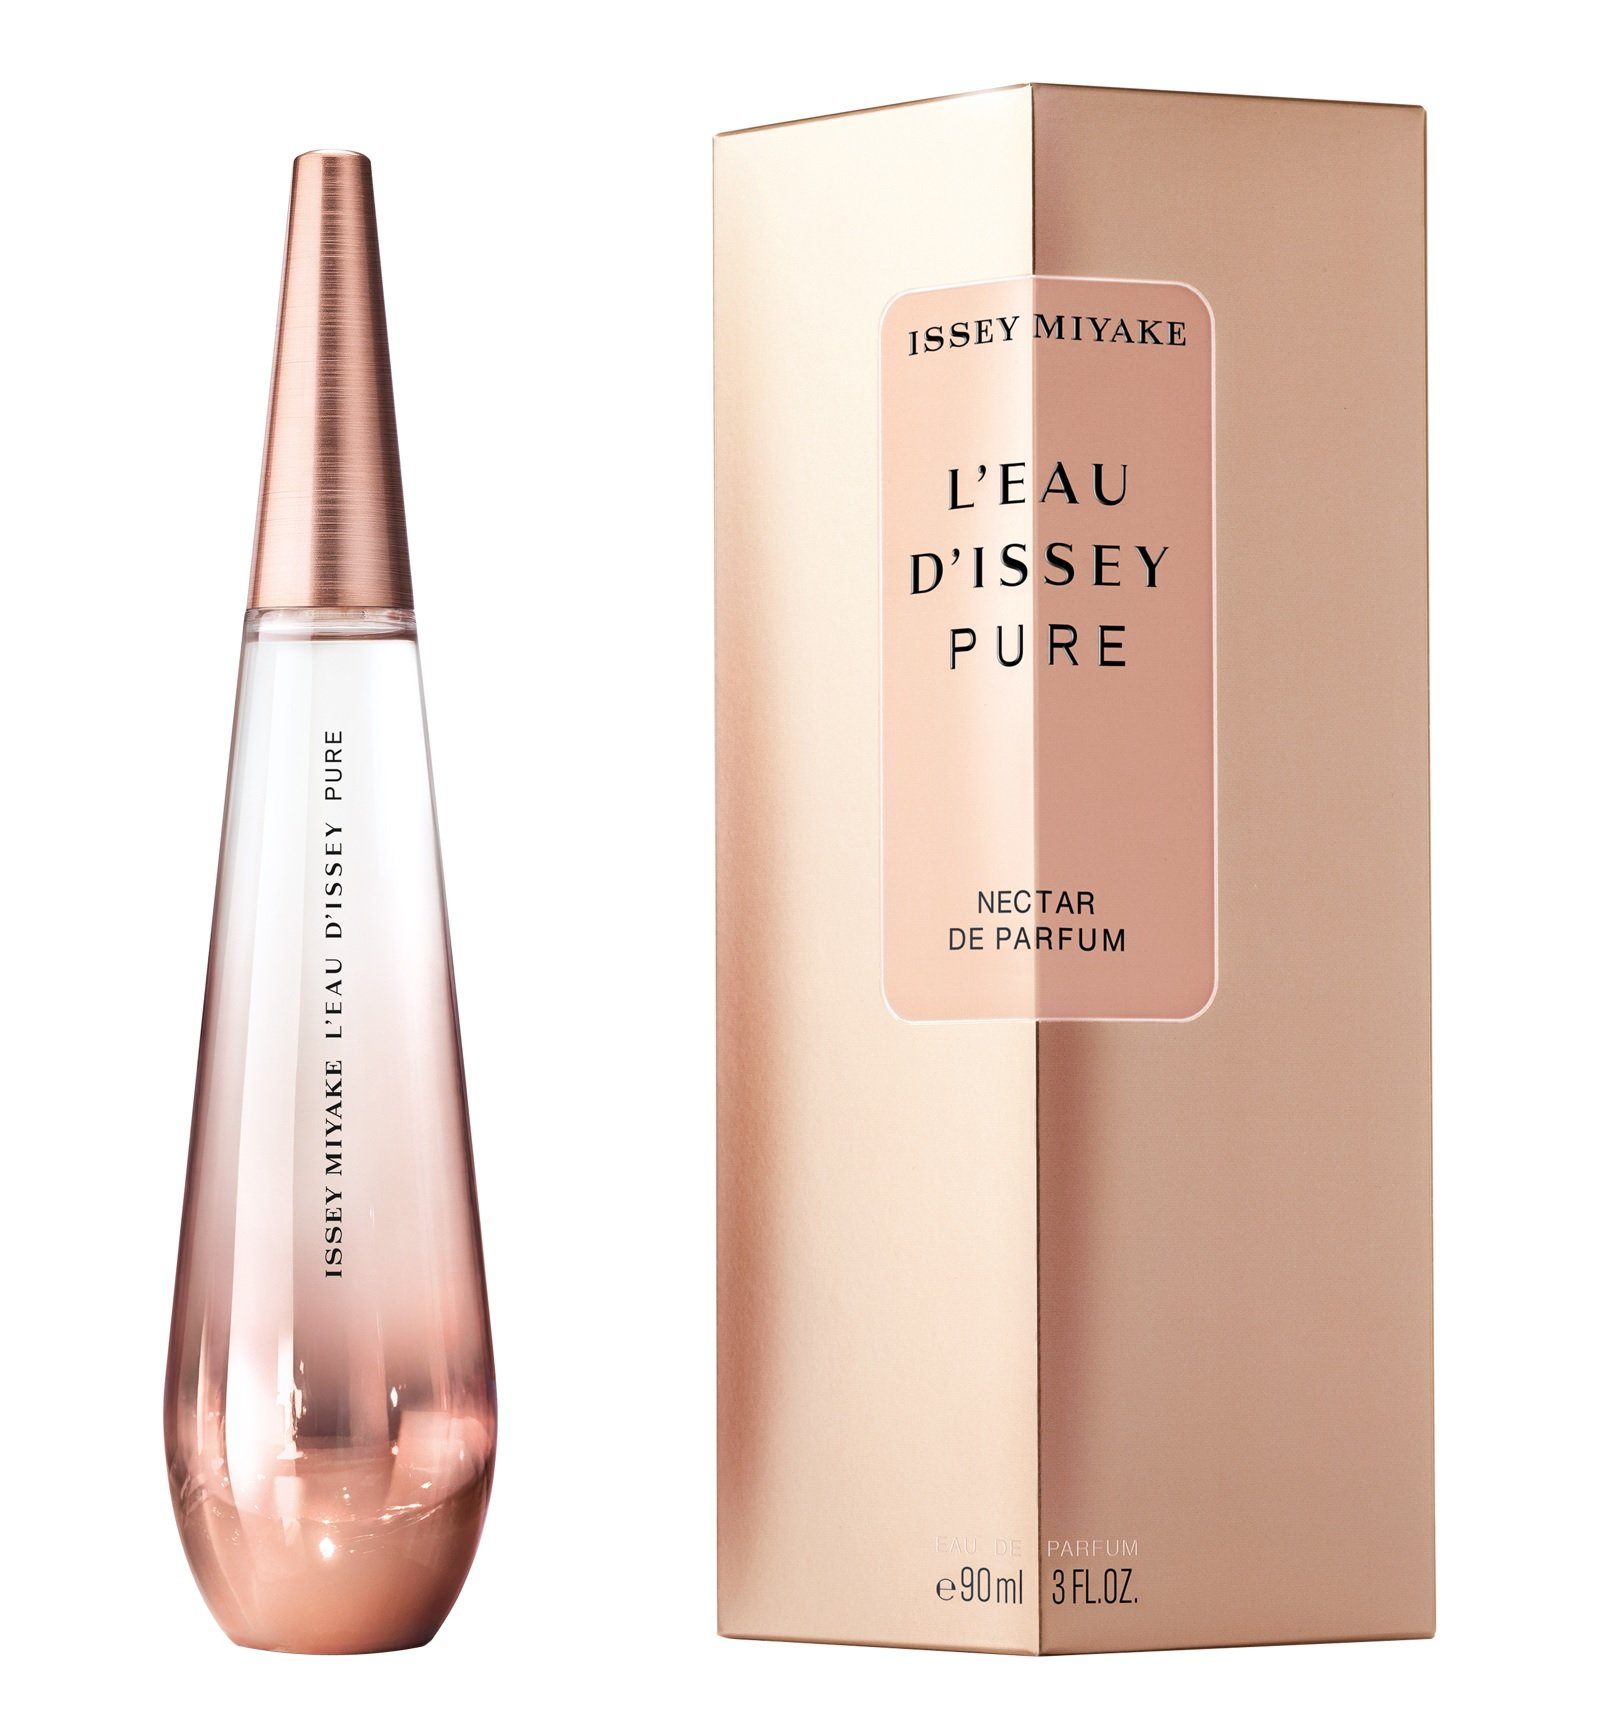 Issey Miyake L'eau D'Issey Pure Nectar De Parfum 3.0 oz for women ...